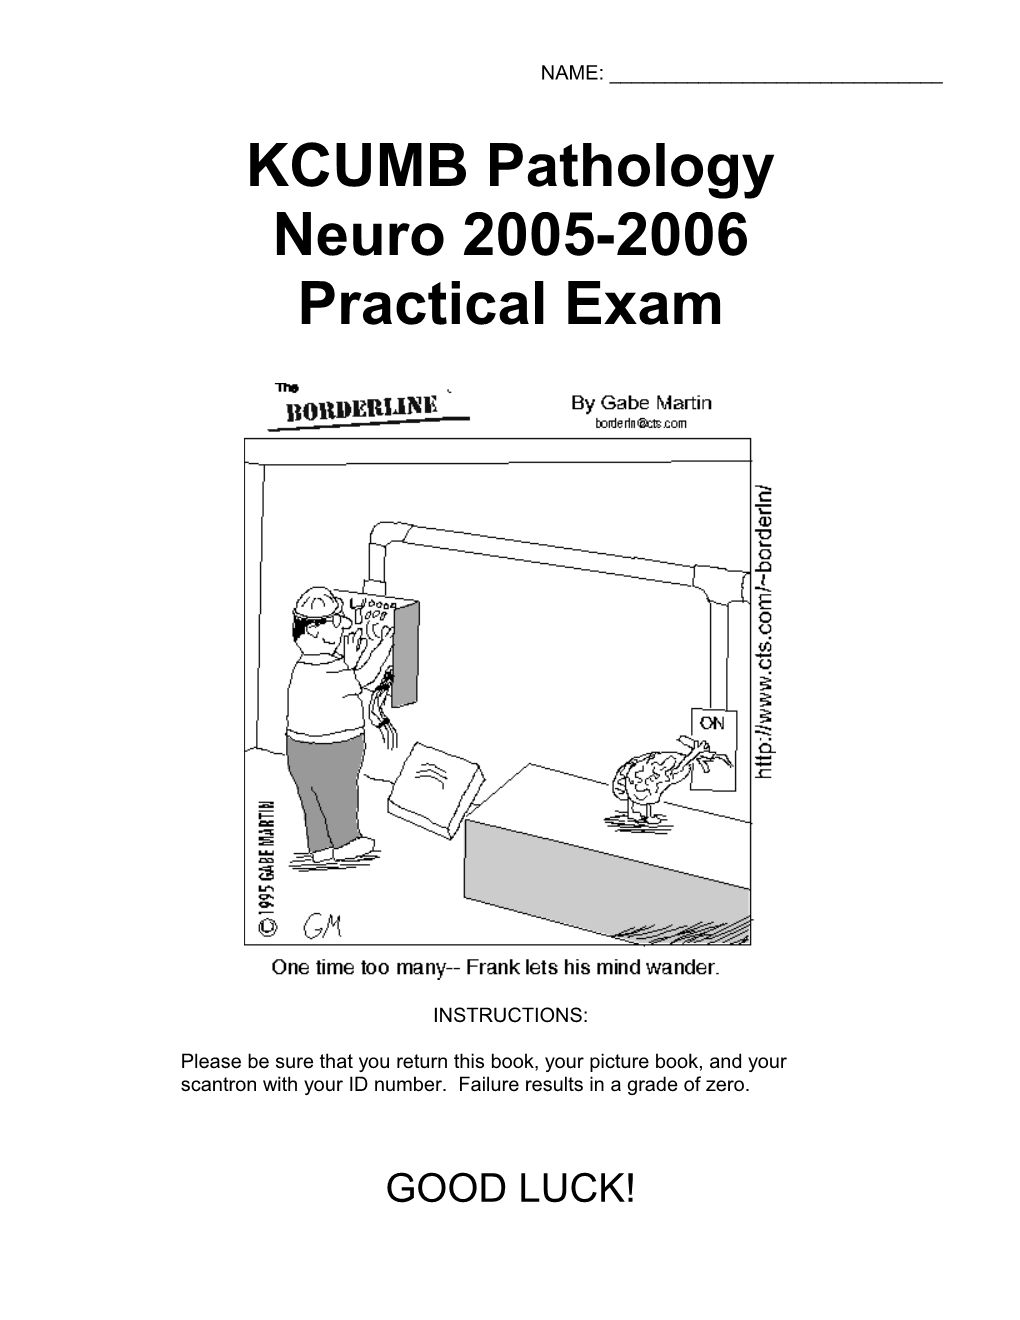 KCUMB Pathology